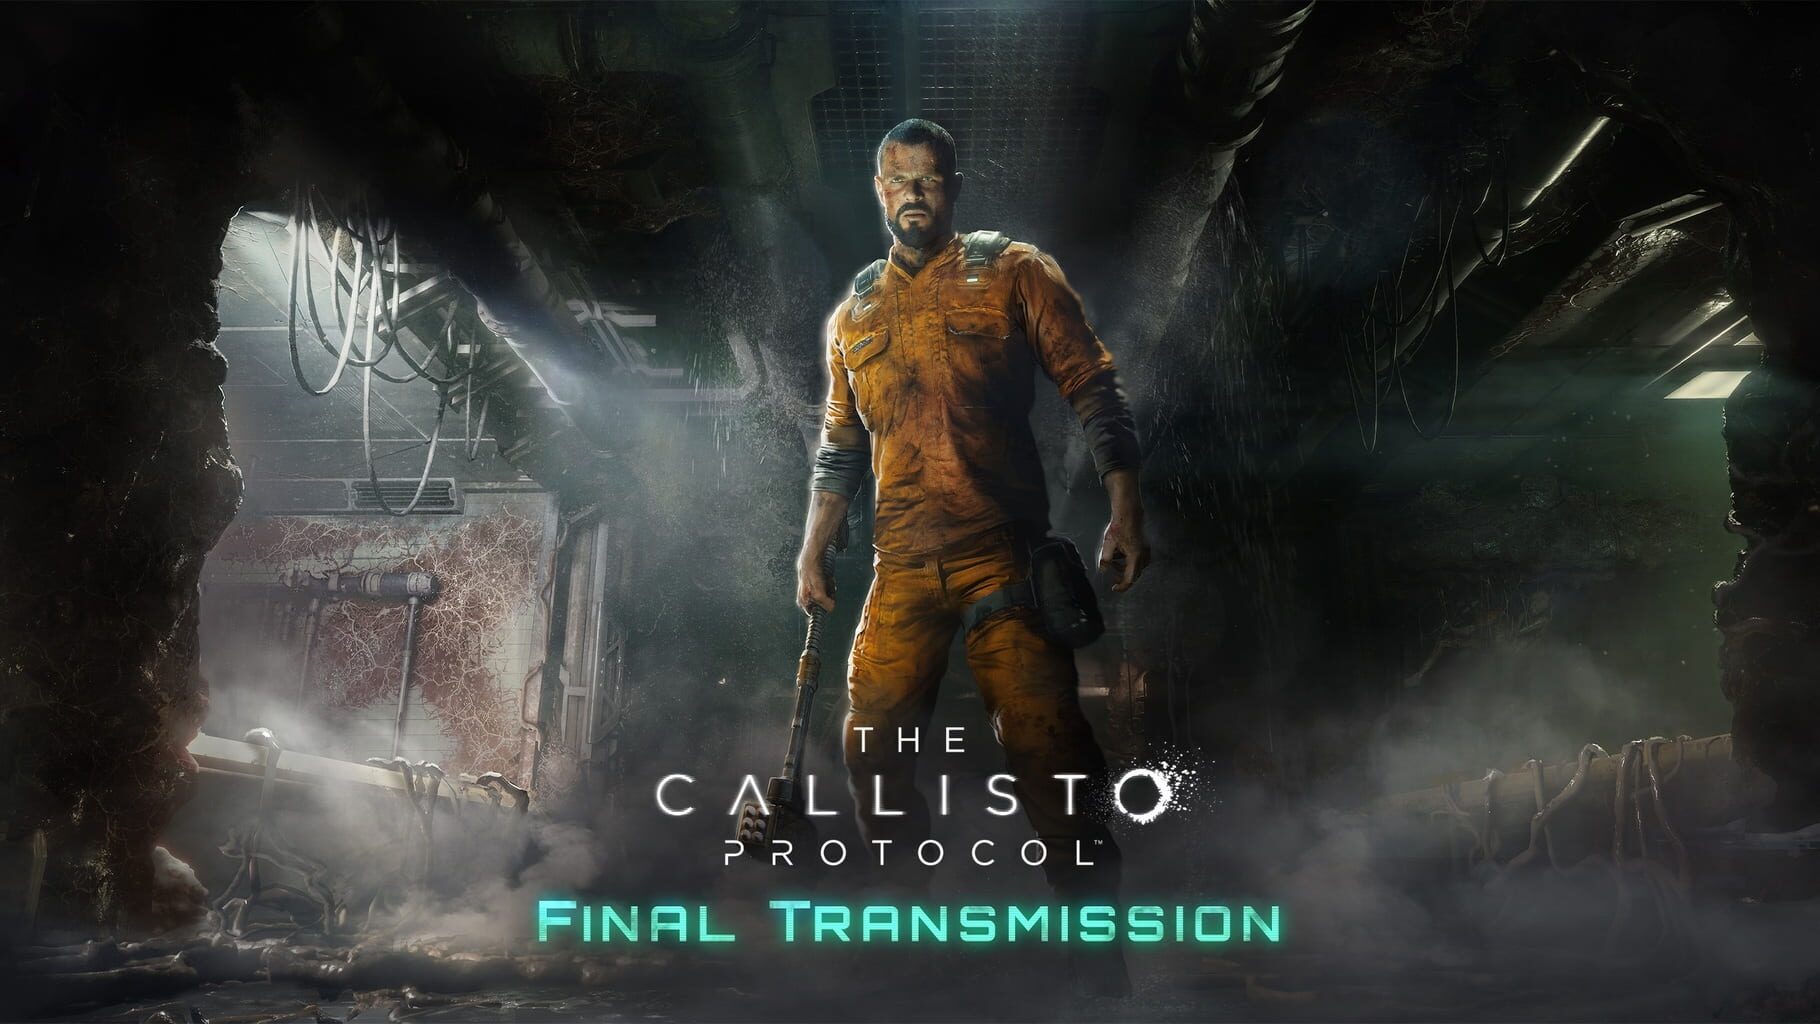 The Callisto Protocol: Final Transmission Image